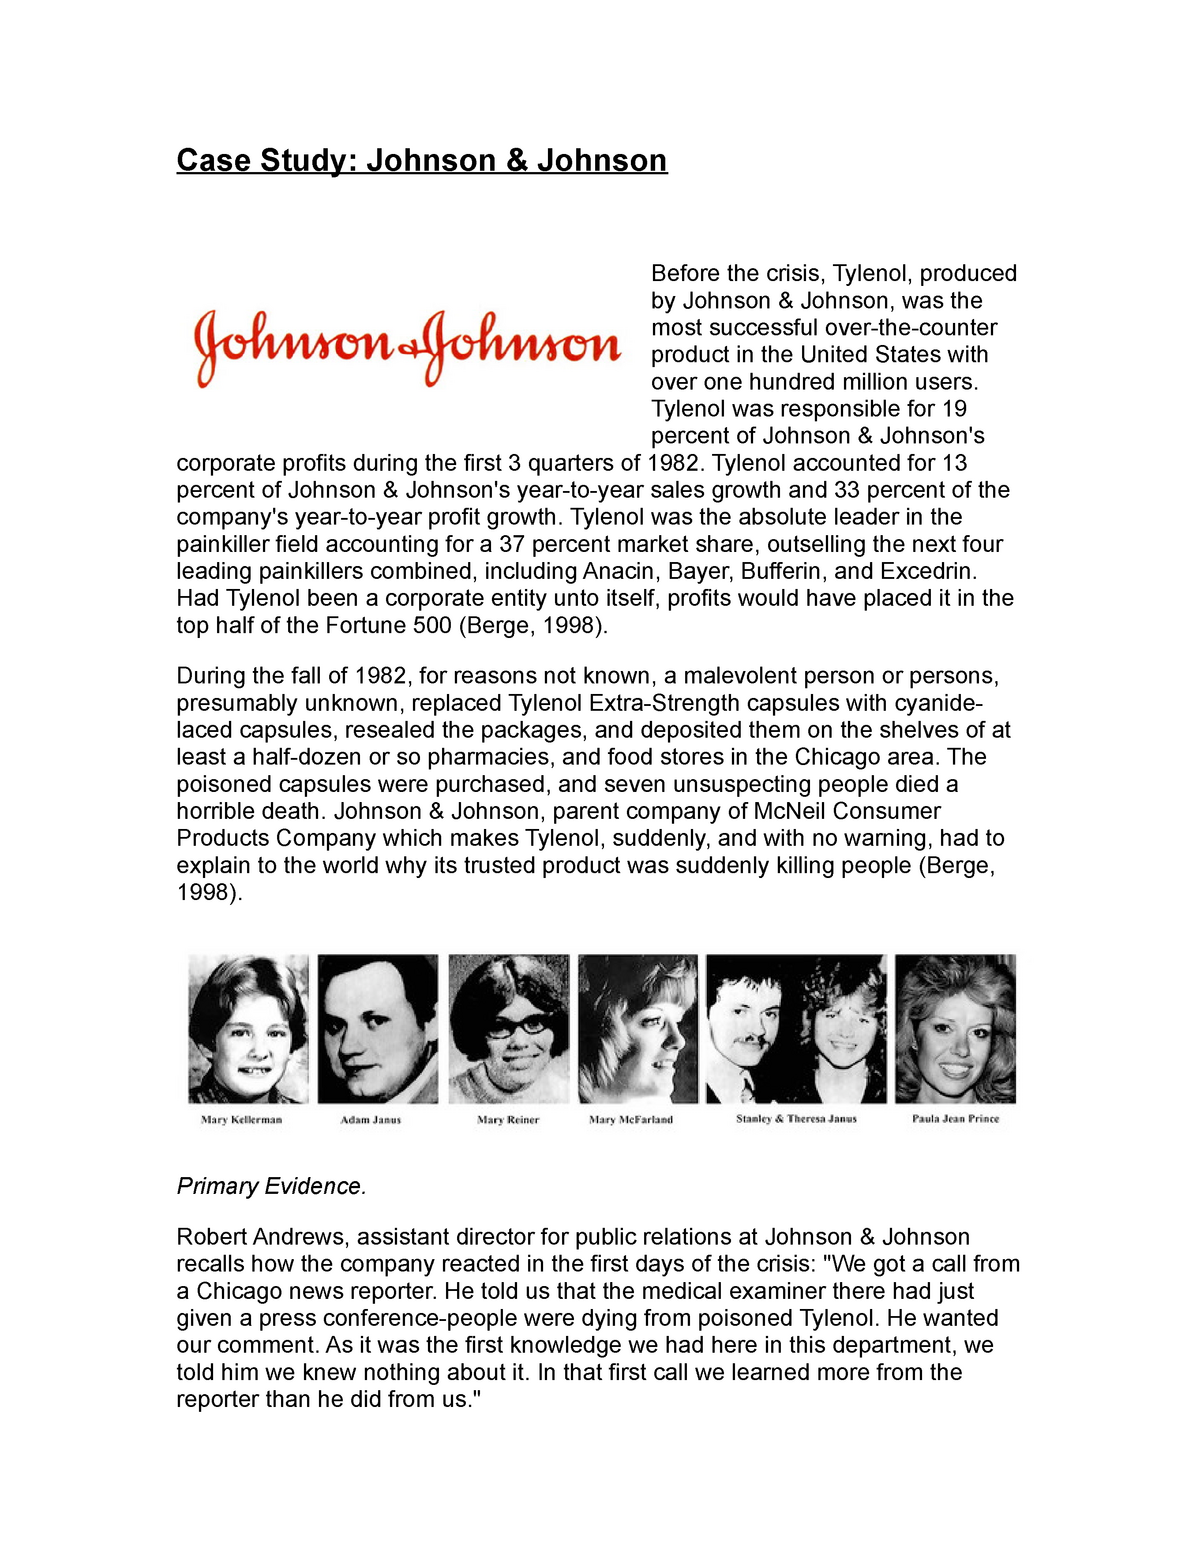 johnson and johnson case study